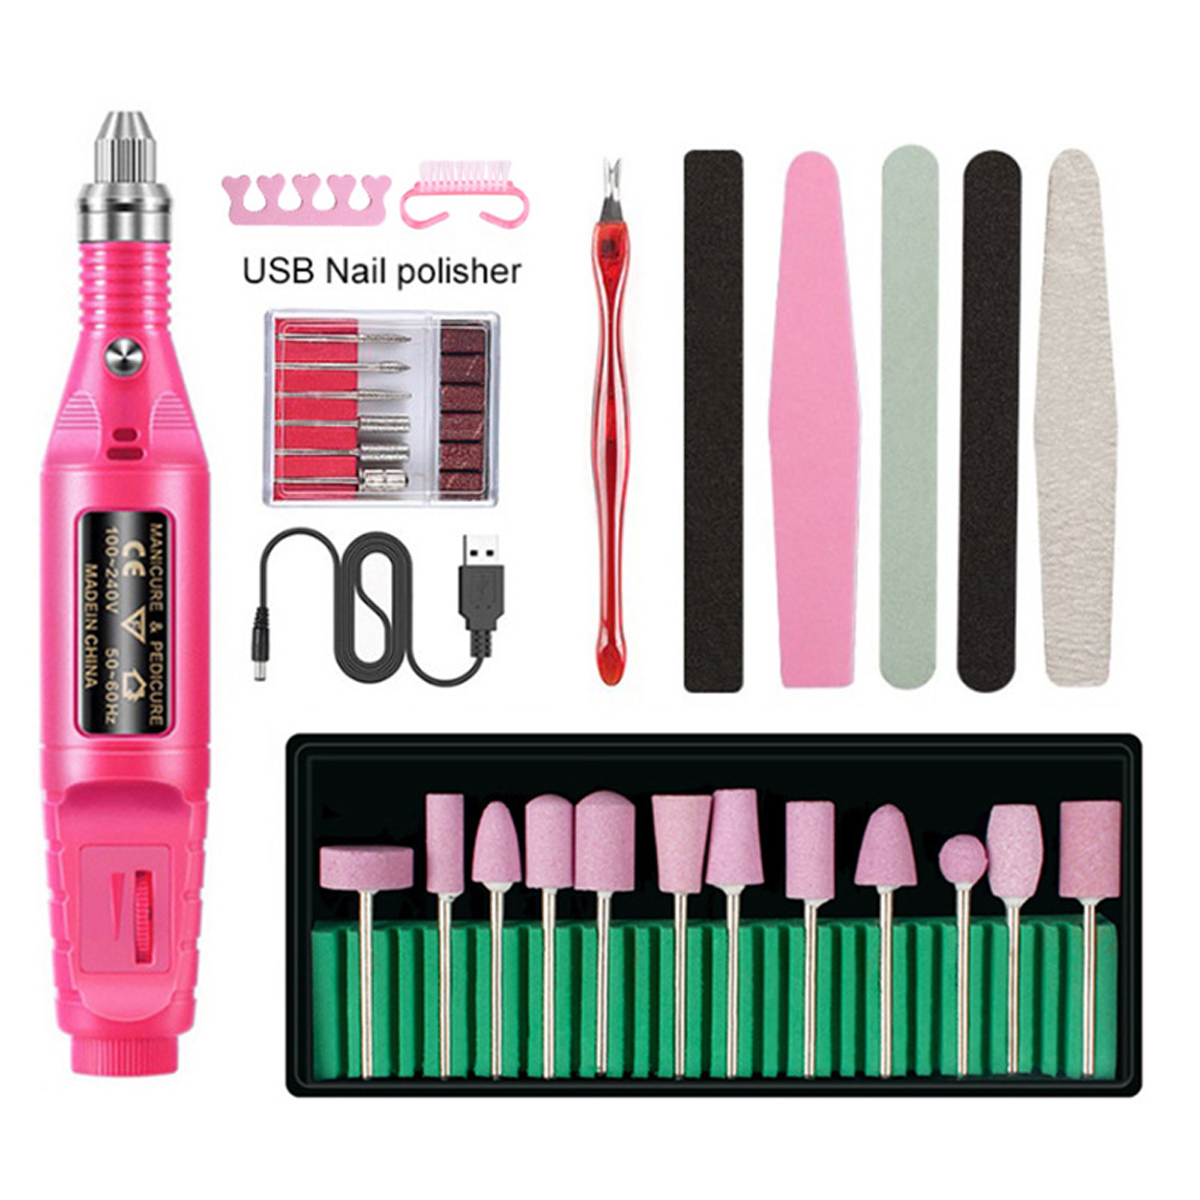 USB Electric Nail Drill Machine Nail Polisher Pen DIY Acrulic Nail Art Manicure Tools Set - Pink Colour